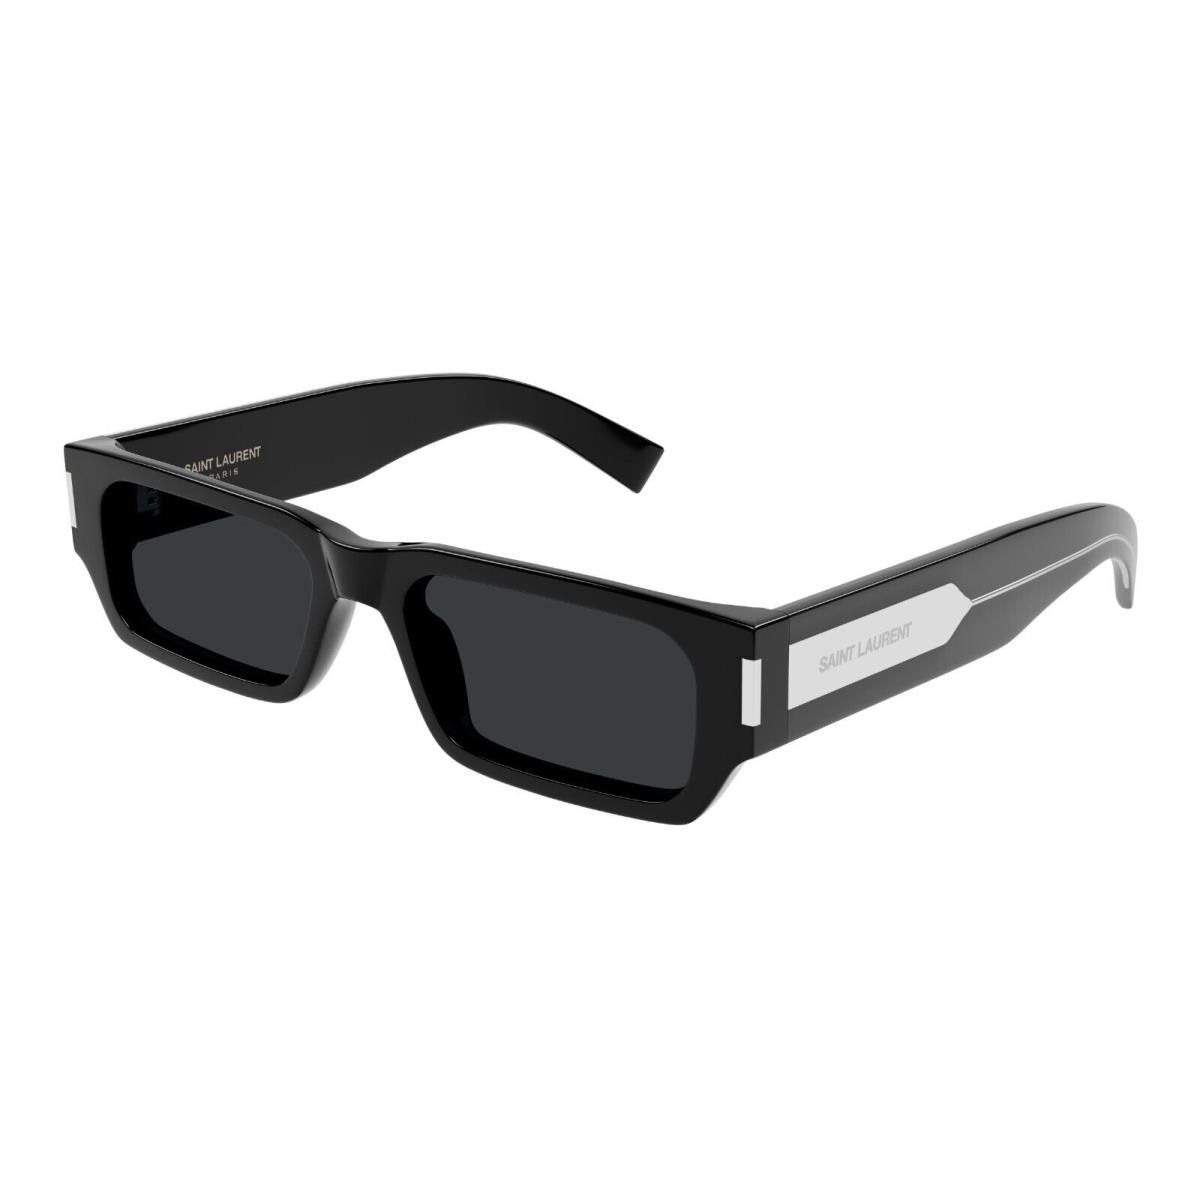 Saint Laurent SL 660 Black/grey 001 Sunglasses